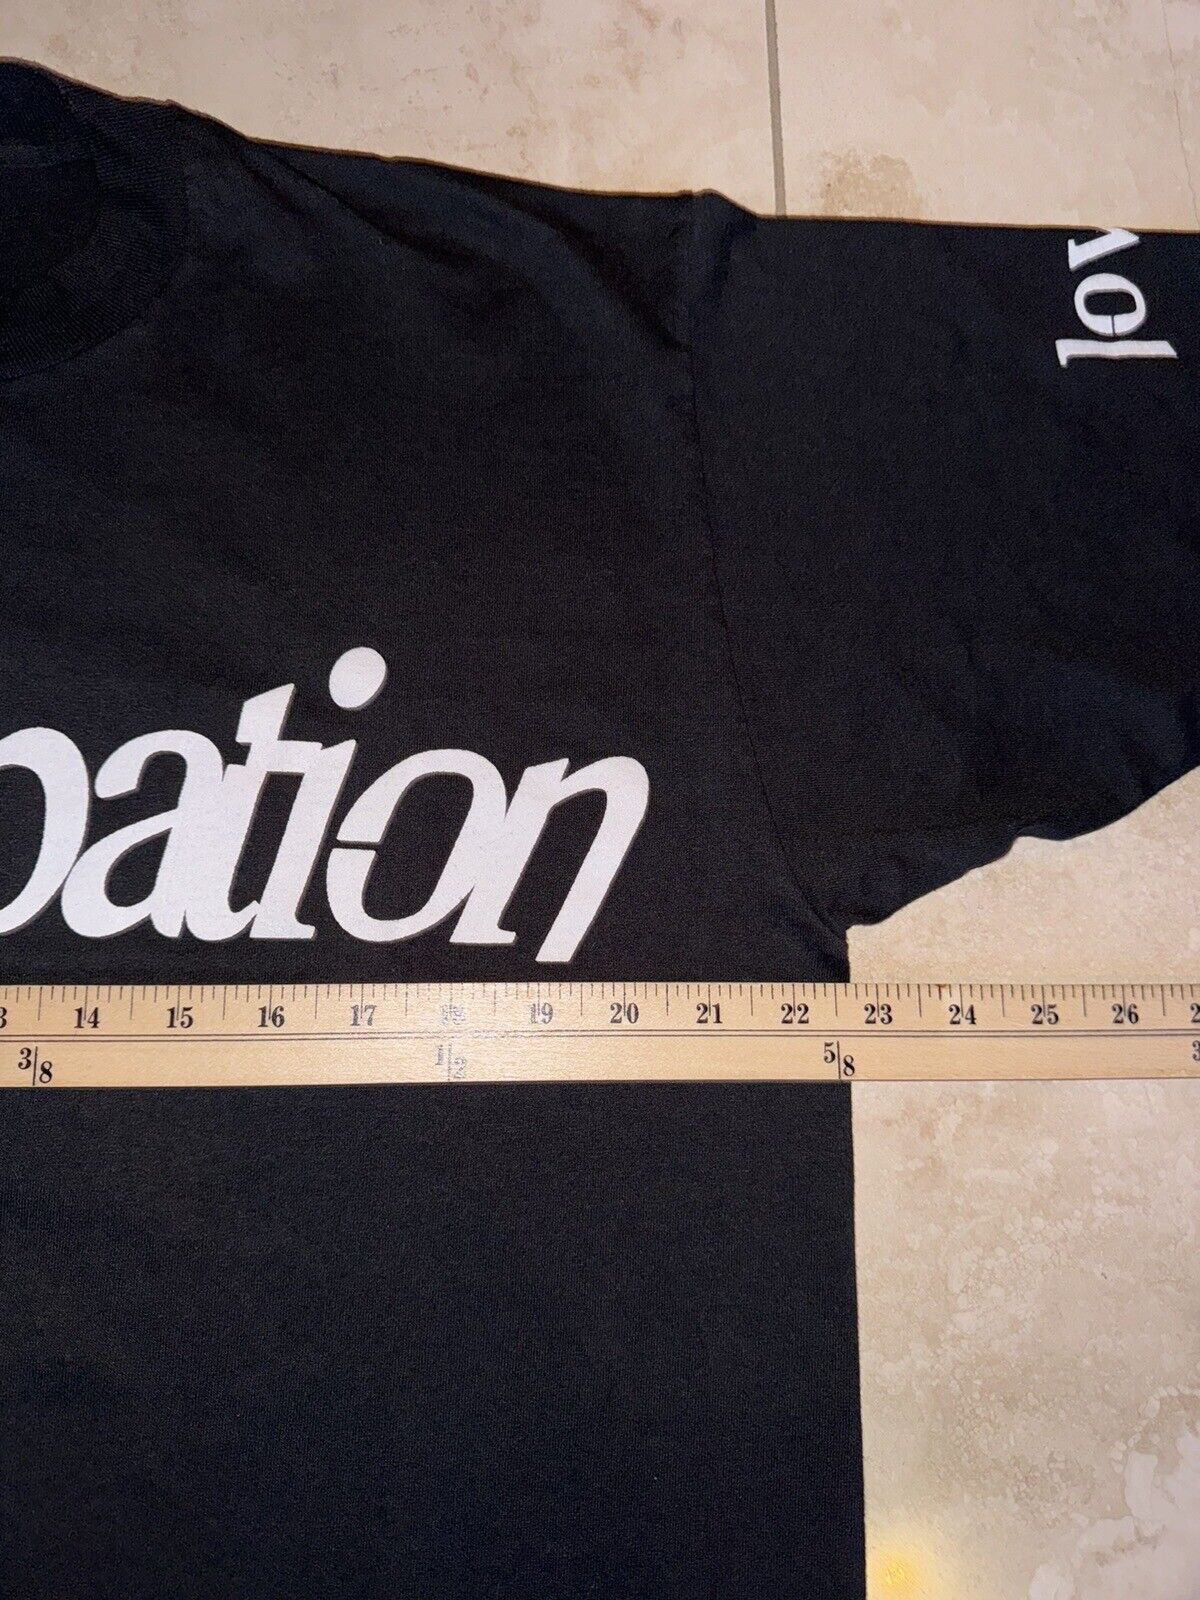 Vintage 1996 Prince Emancipation T-Shirt Size XL Amazing Condition Rare